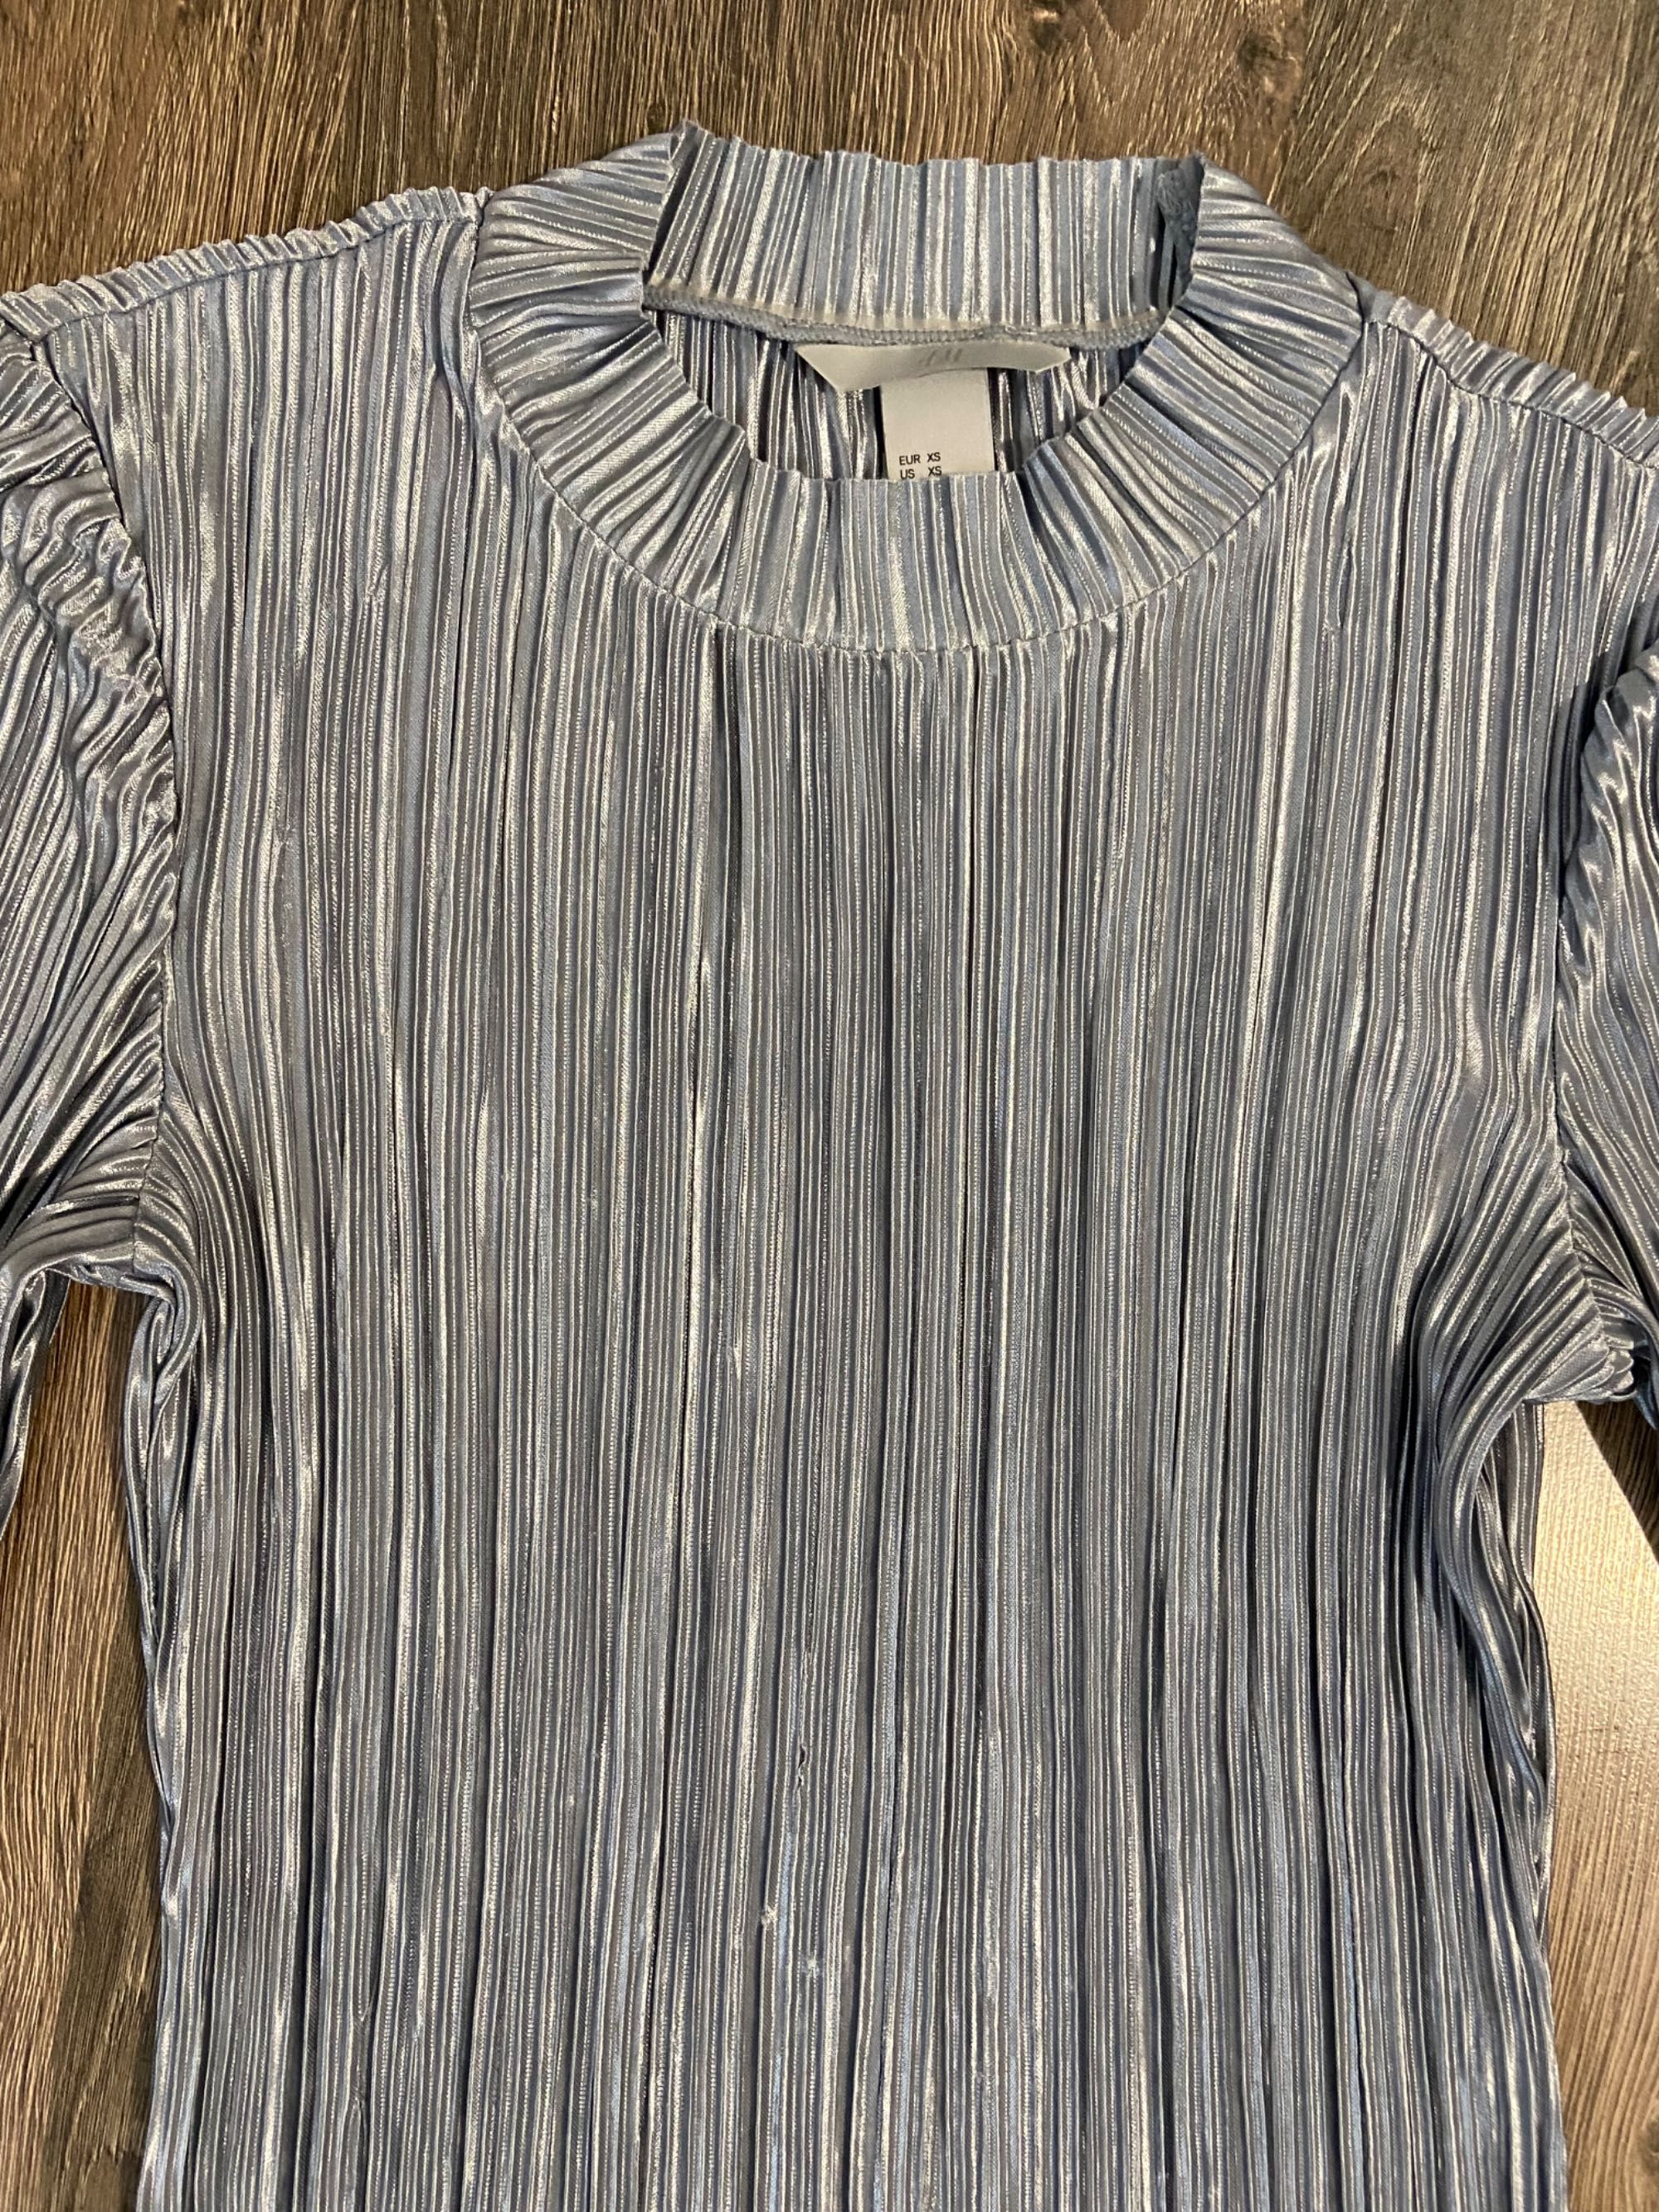 Bluza dama H&M argintie cu striatii